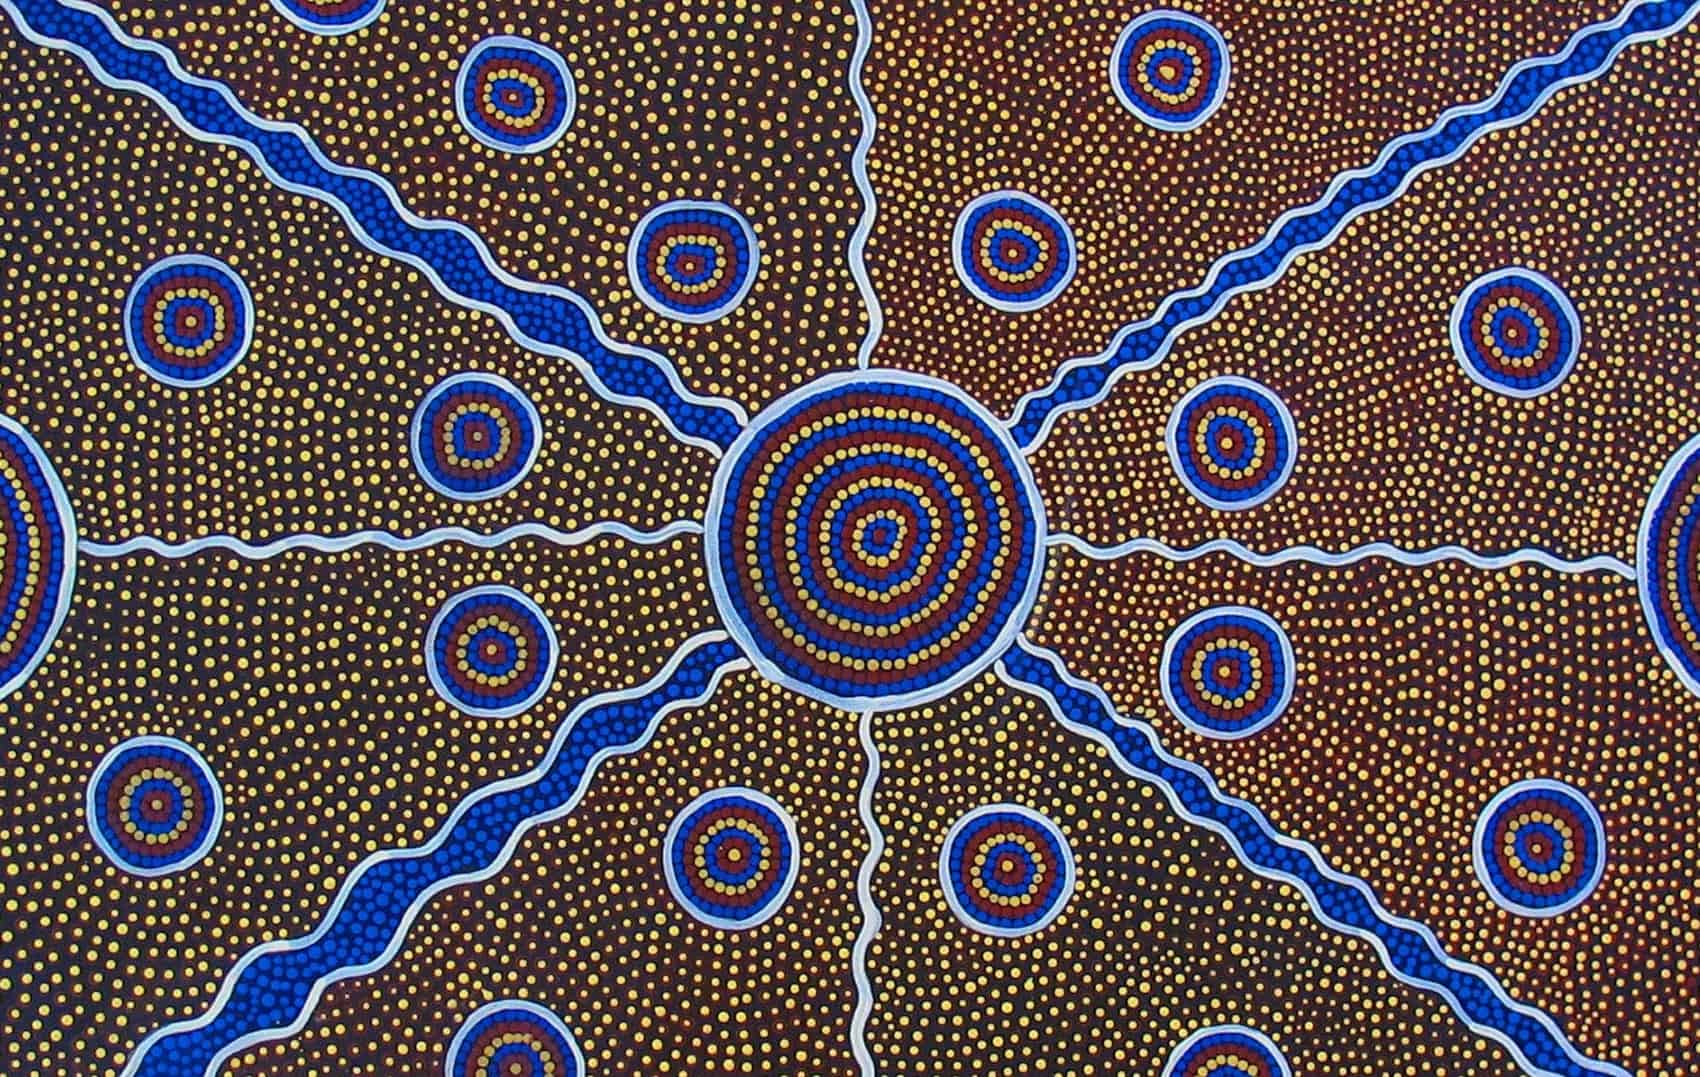 Indigenous artwork